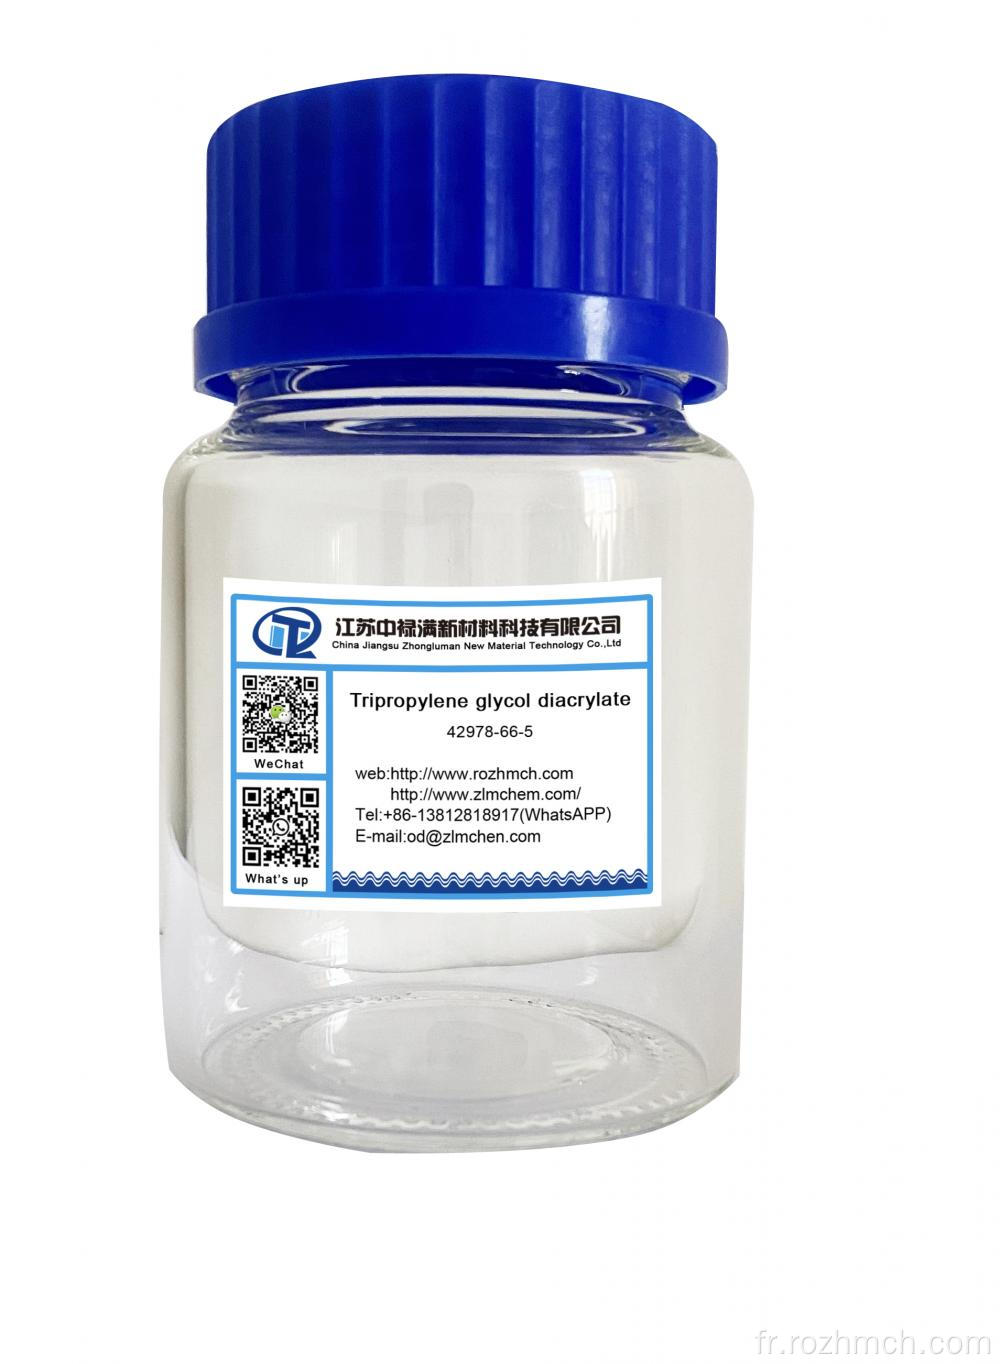 Tripropylène glycol diacrylate CAS 42978-66-5